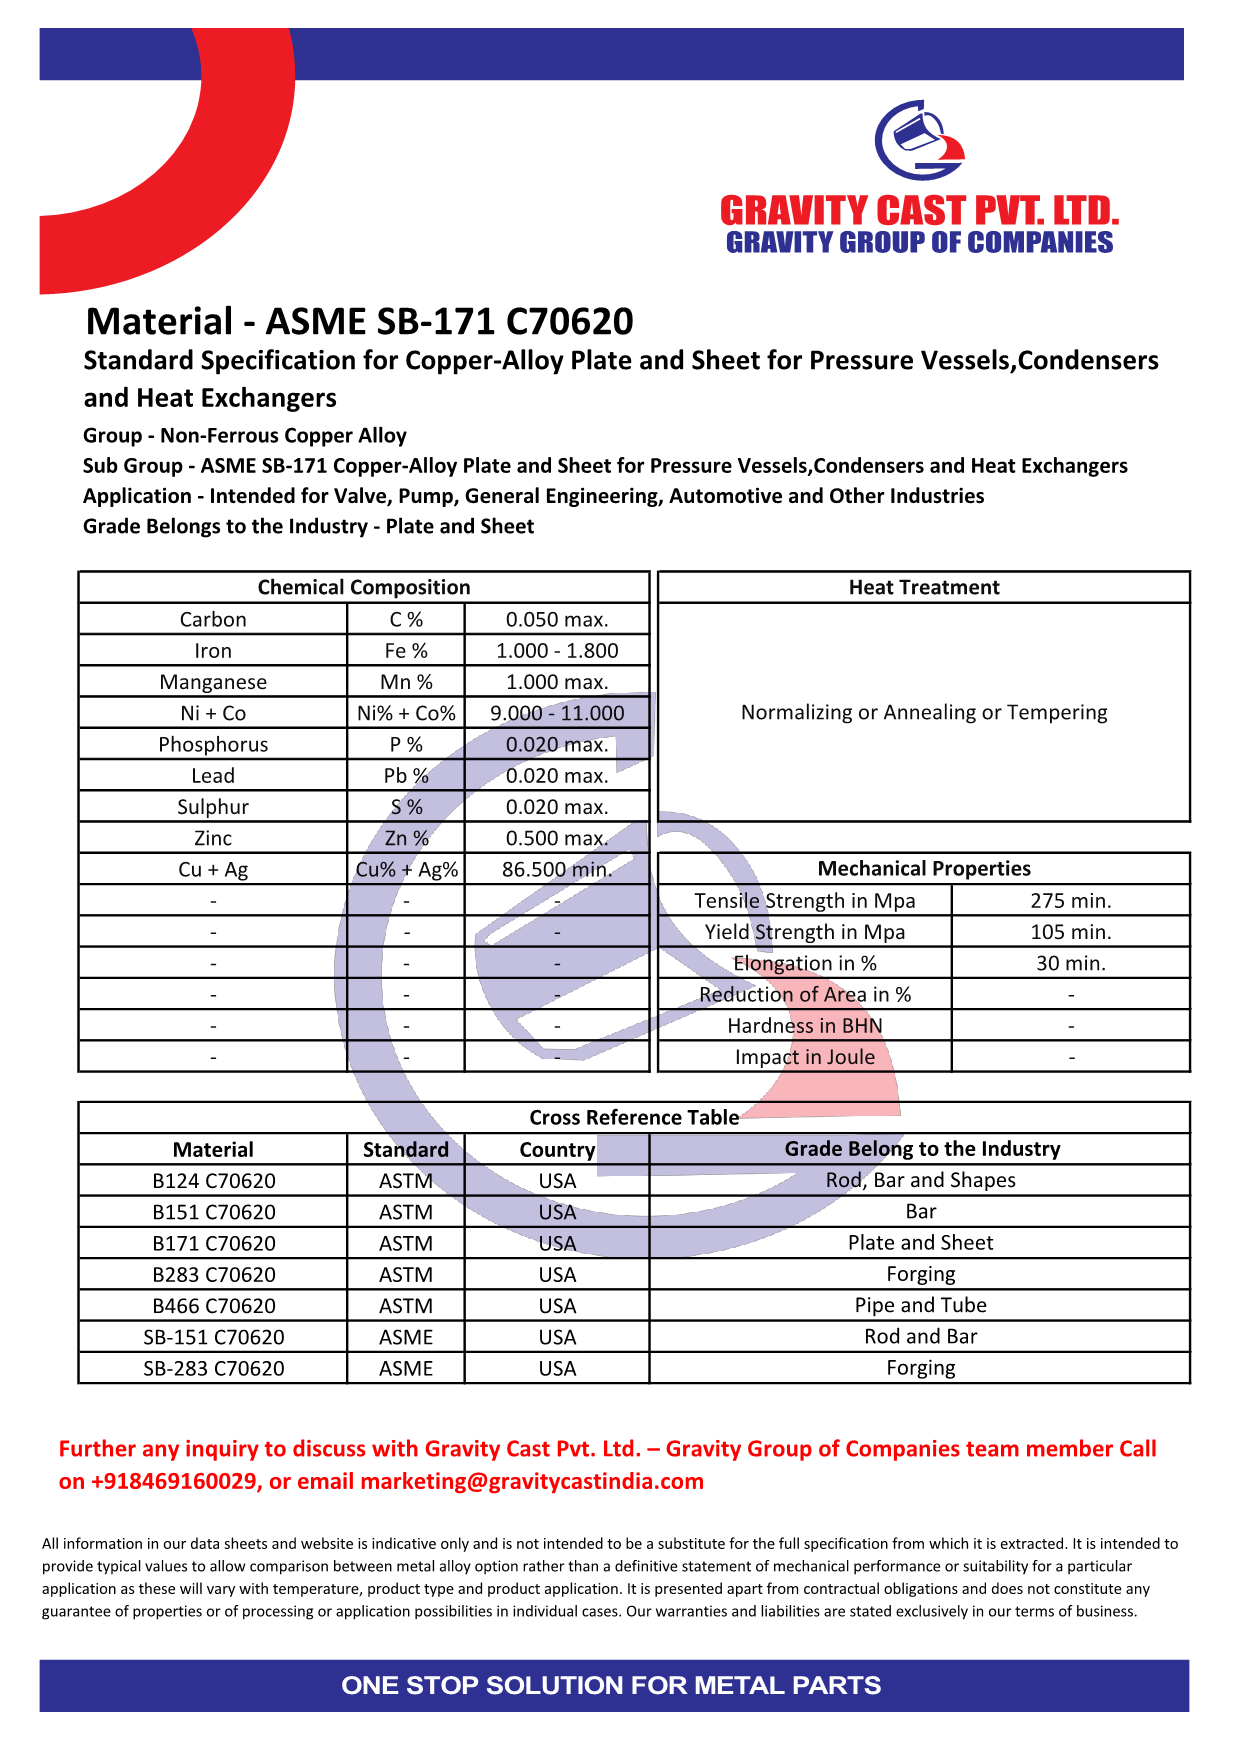 ASME SB-171 C70620.pdf